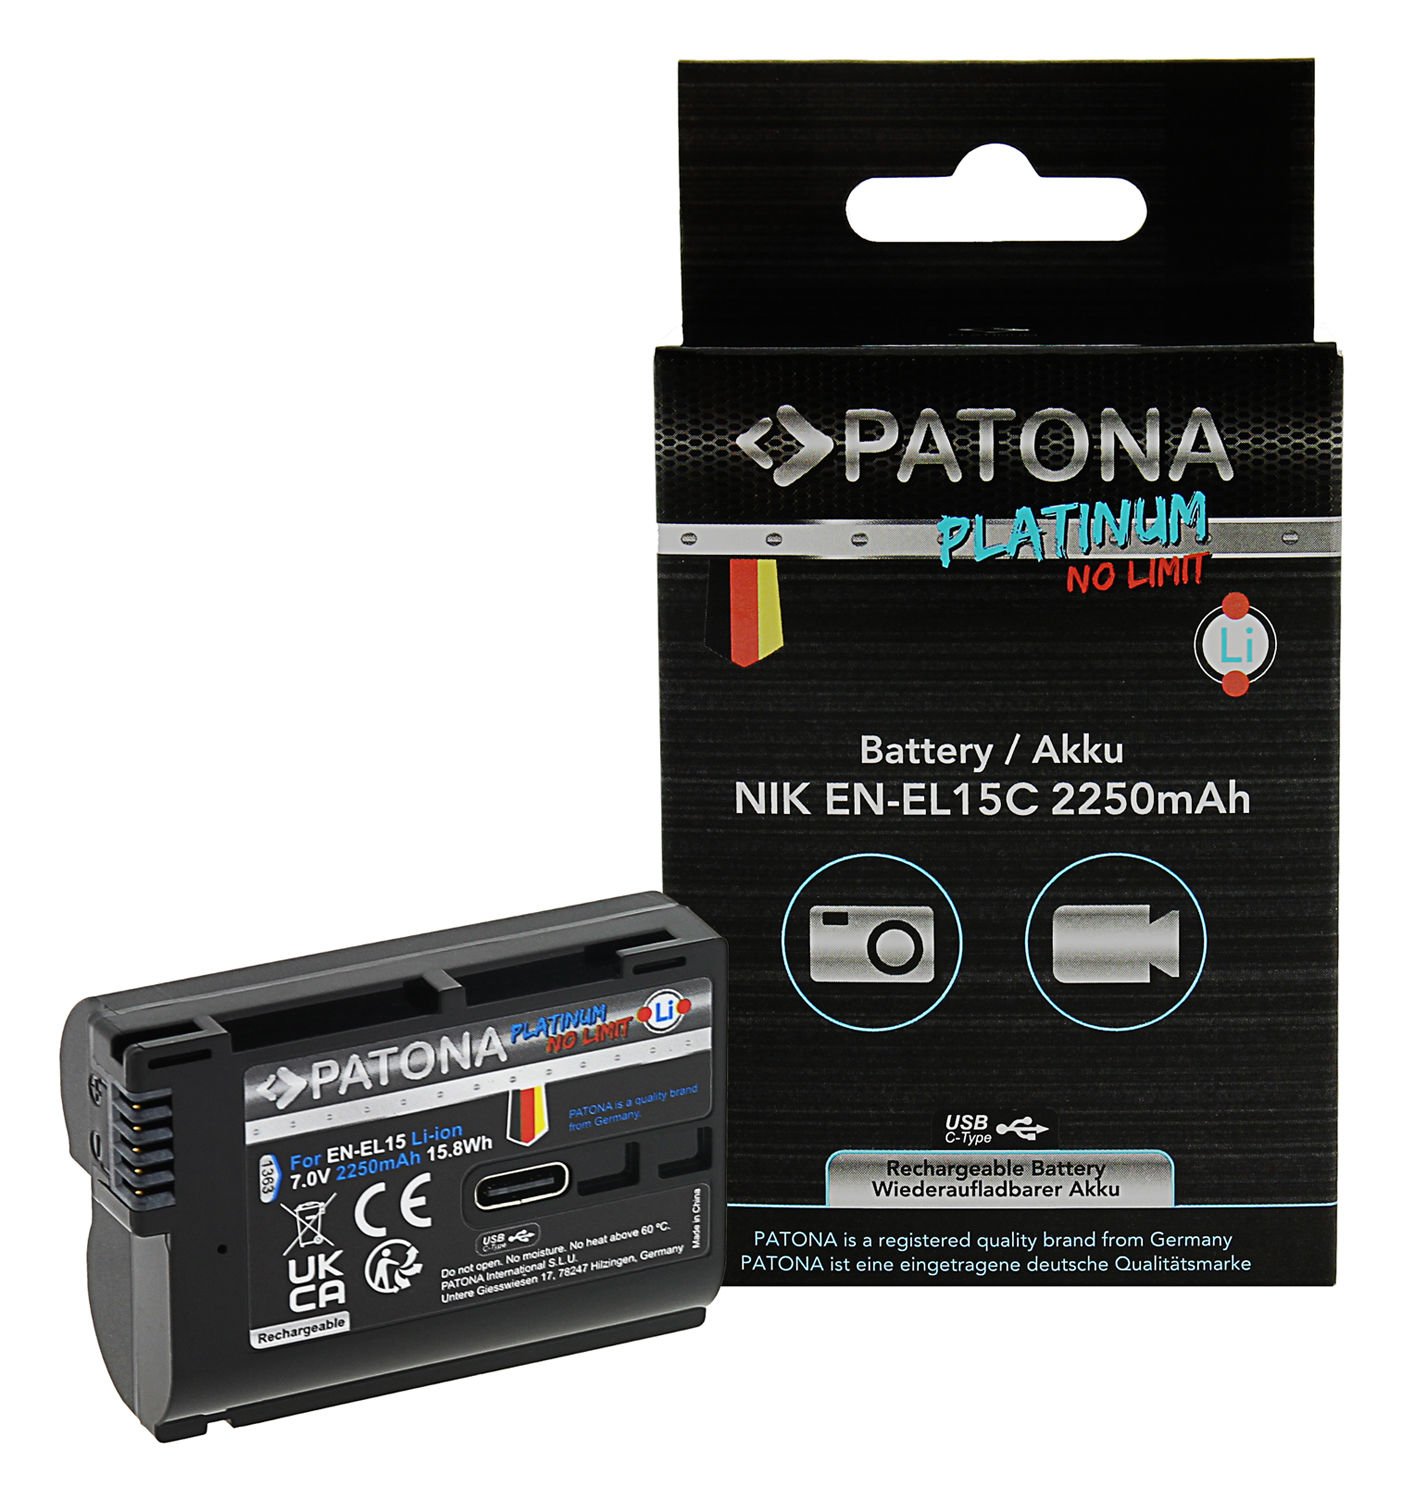 Patona Platinum Nikon En-EL15 USB-C Batarya 1363